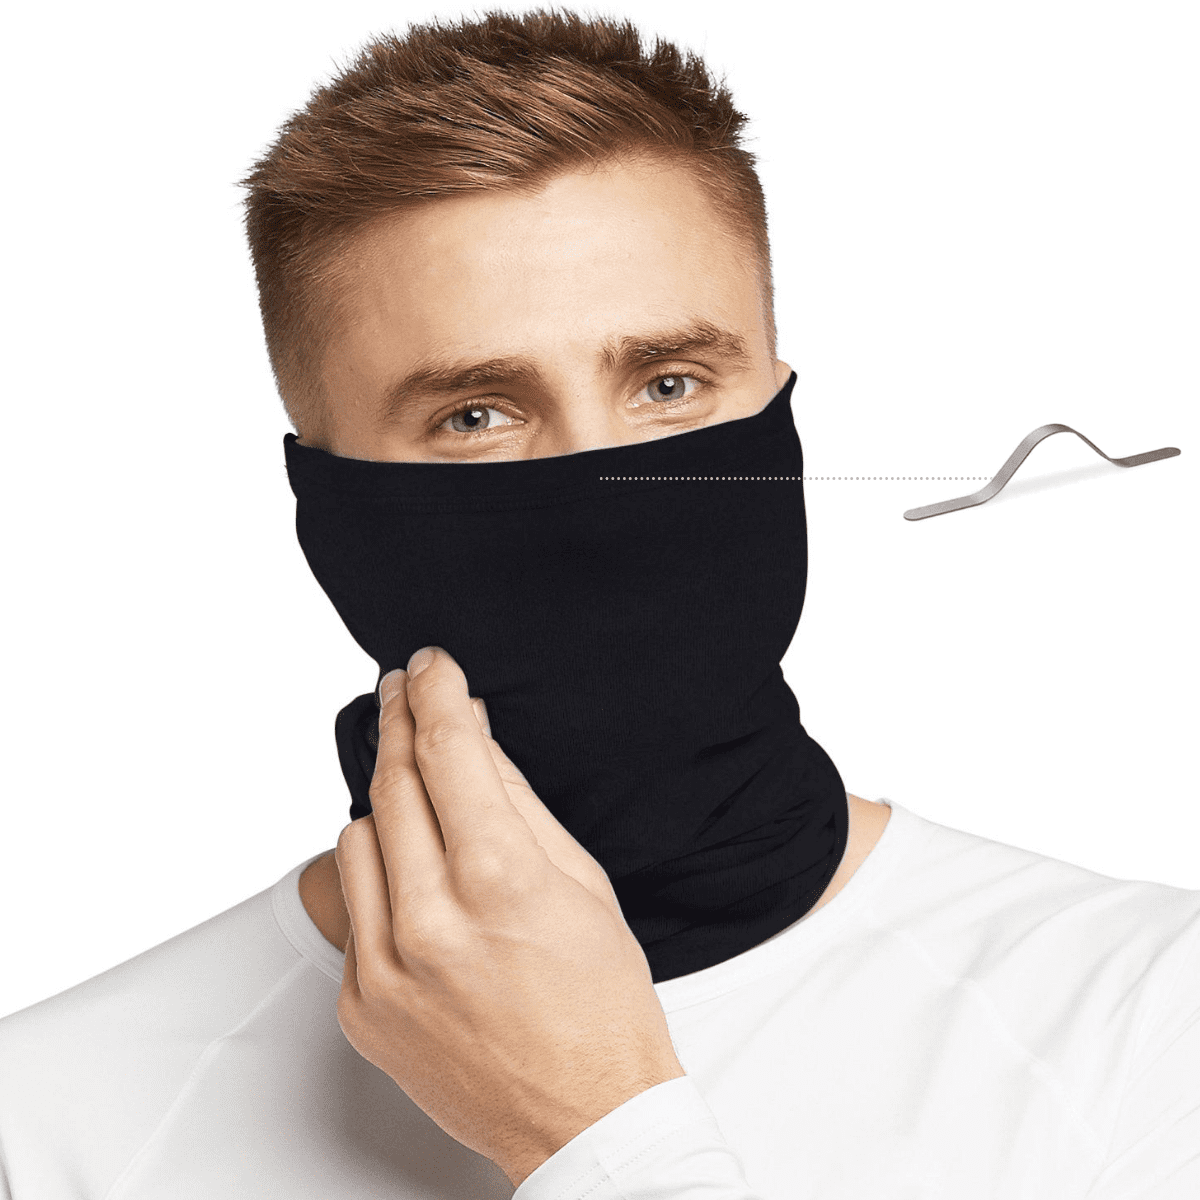 JOYCE 2Pcs Protective Mask,Anti Haze Pollution Dustproof Protective Cover